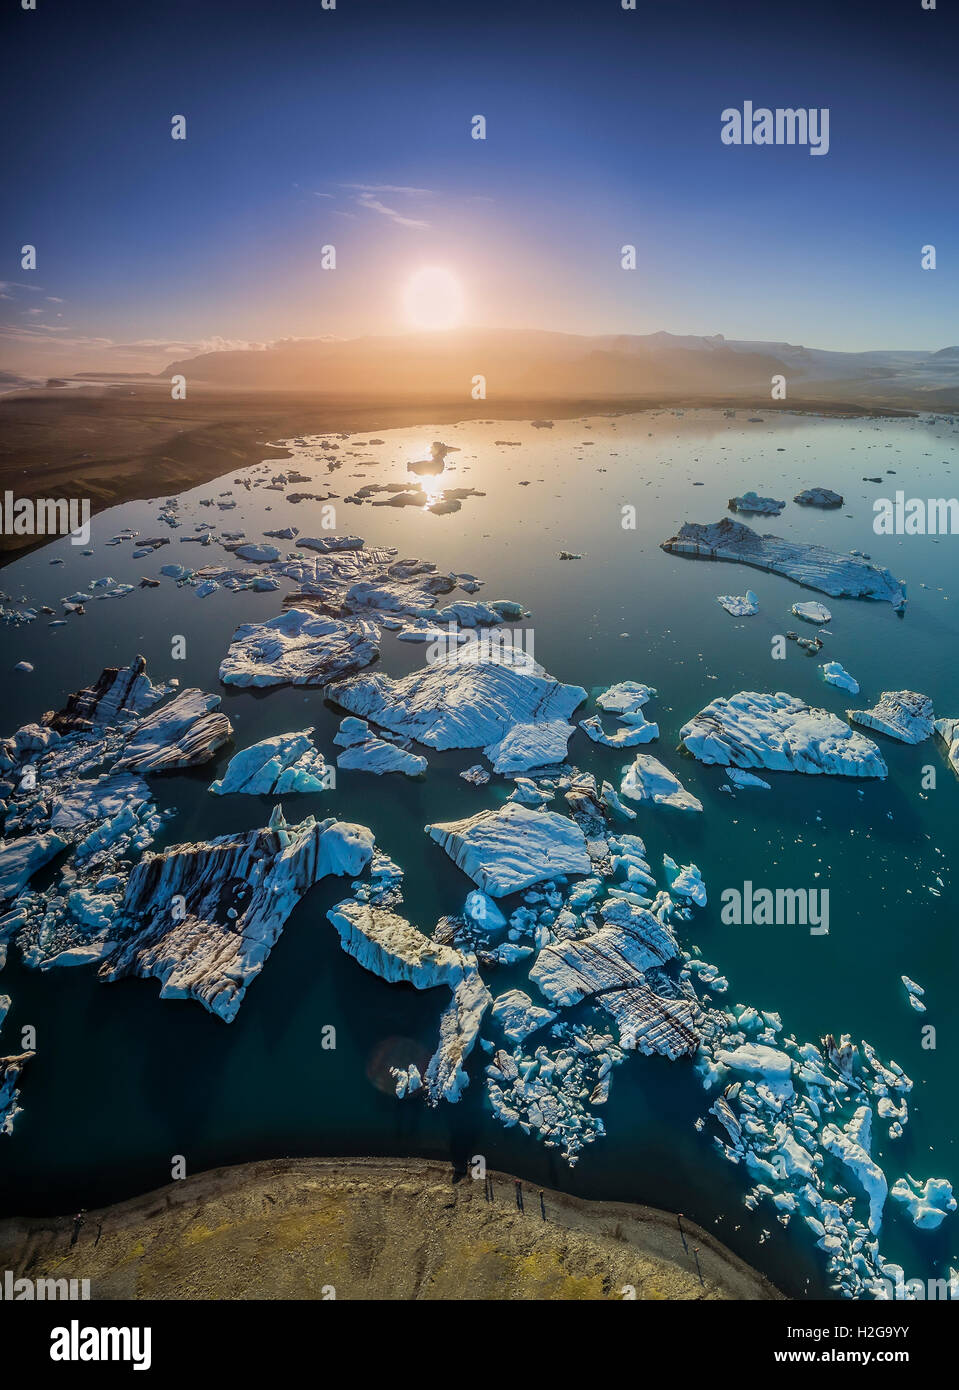 Les icebergs dans la Lagune glaciaire du Jökulsárlón, glacier de Vatnajokull, Breidamerkurjokull, calotte de glace. L'Islande. Photographie de drones Banque D'Images